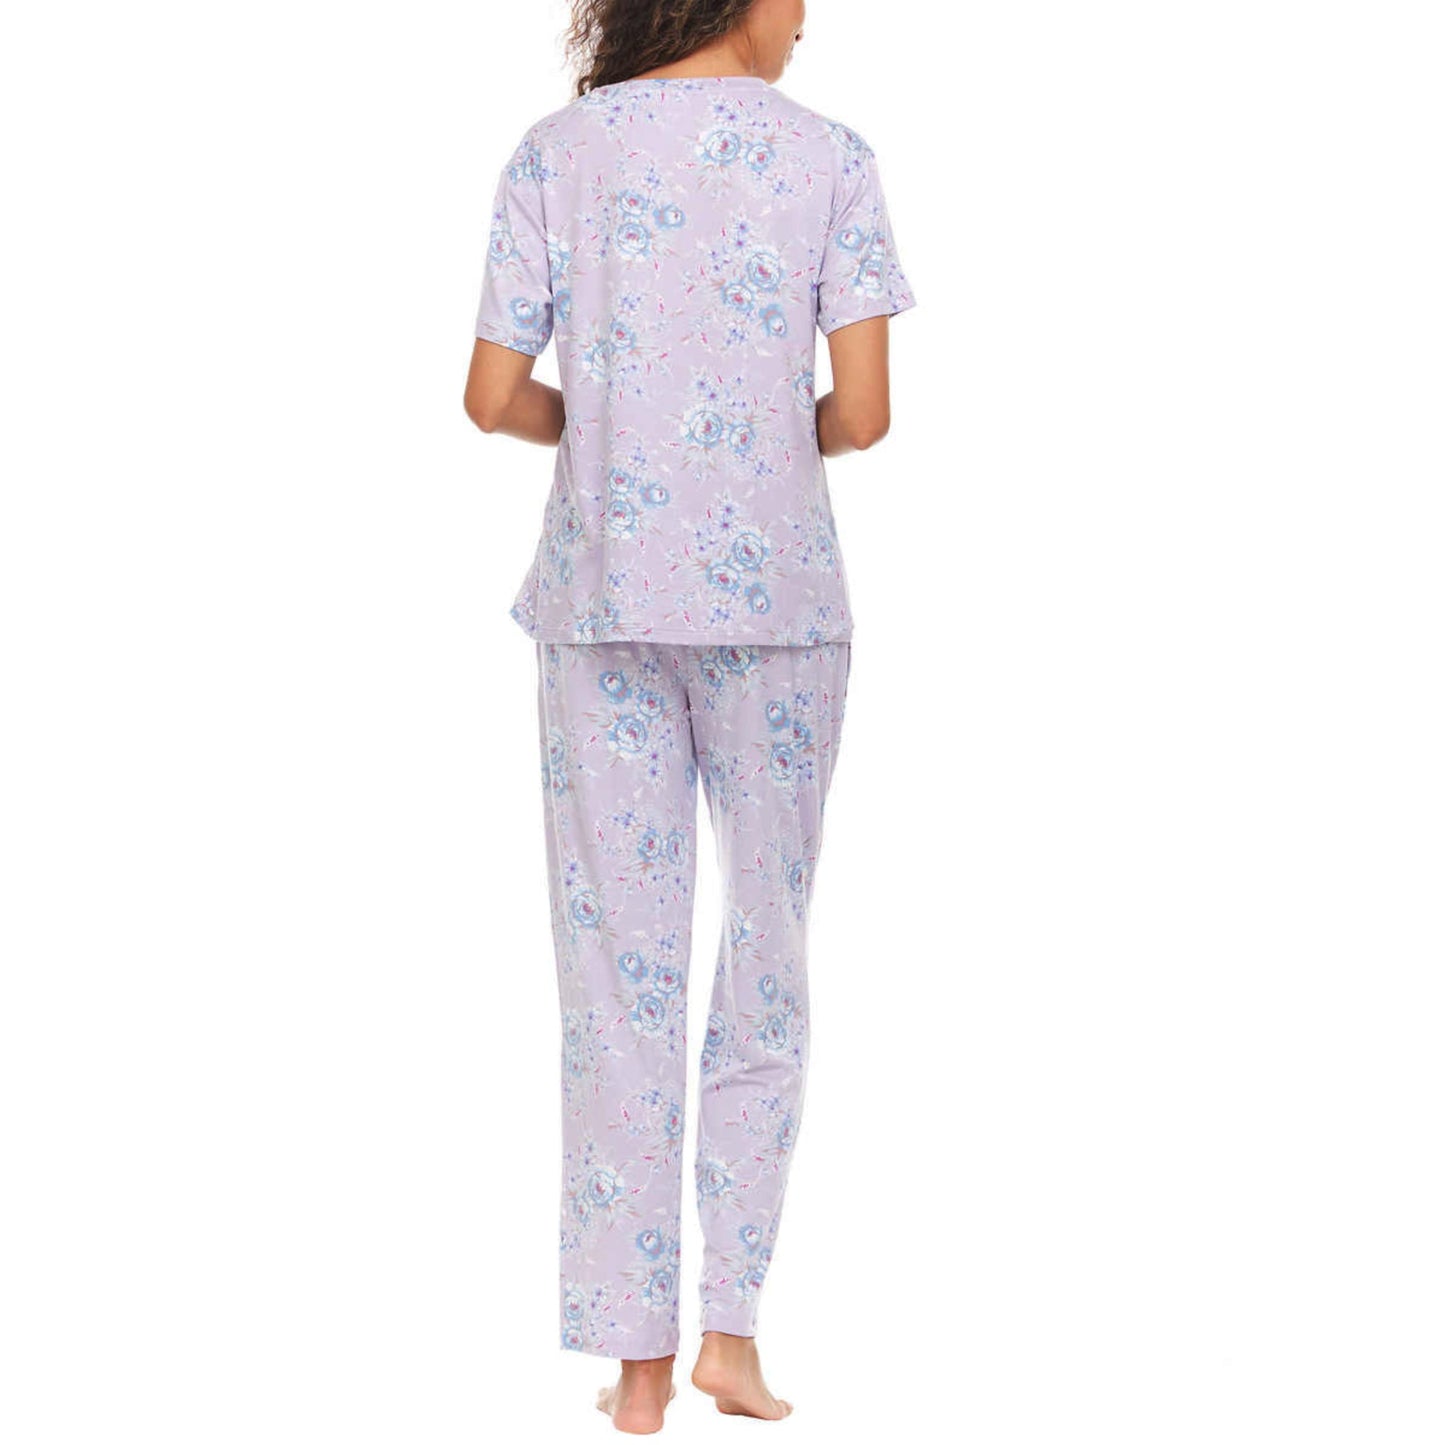 Flora Nikrooz Women's 2-Piece Super Soft Floral Print Top and Pants Pajama Set